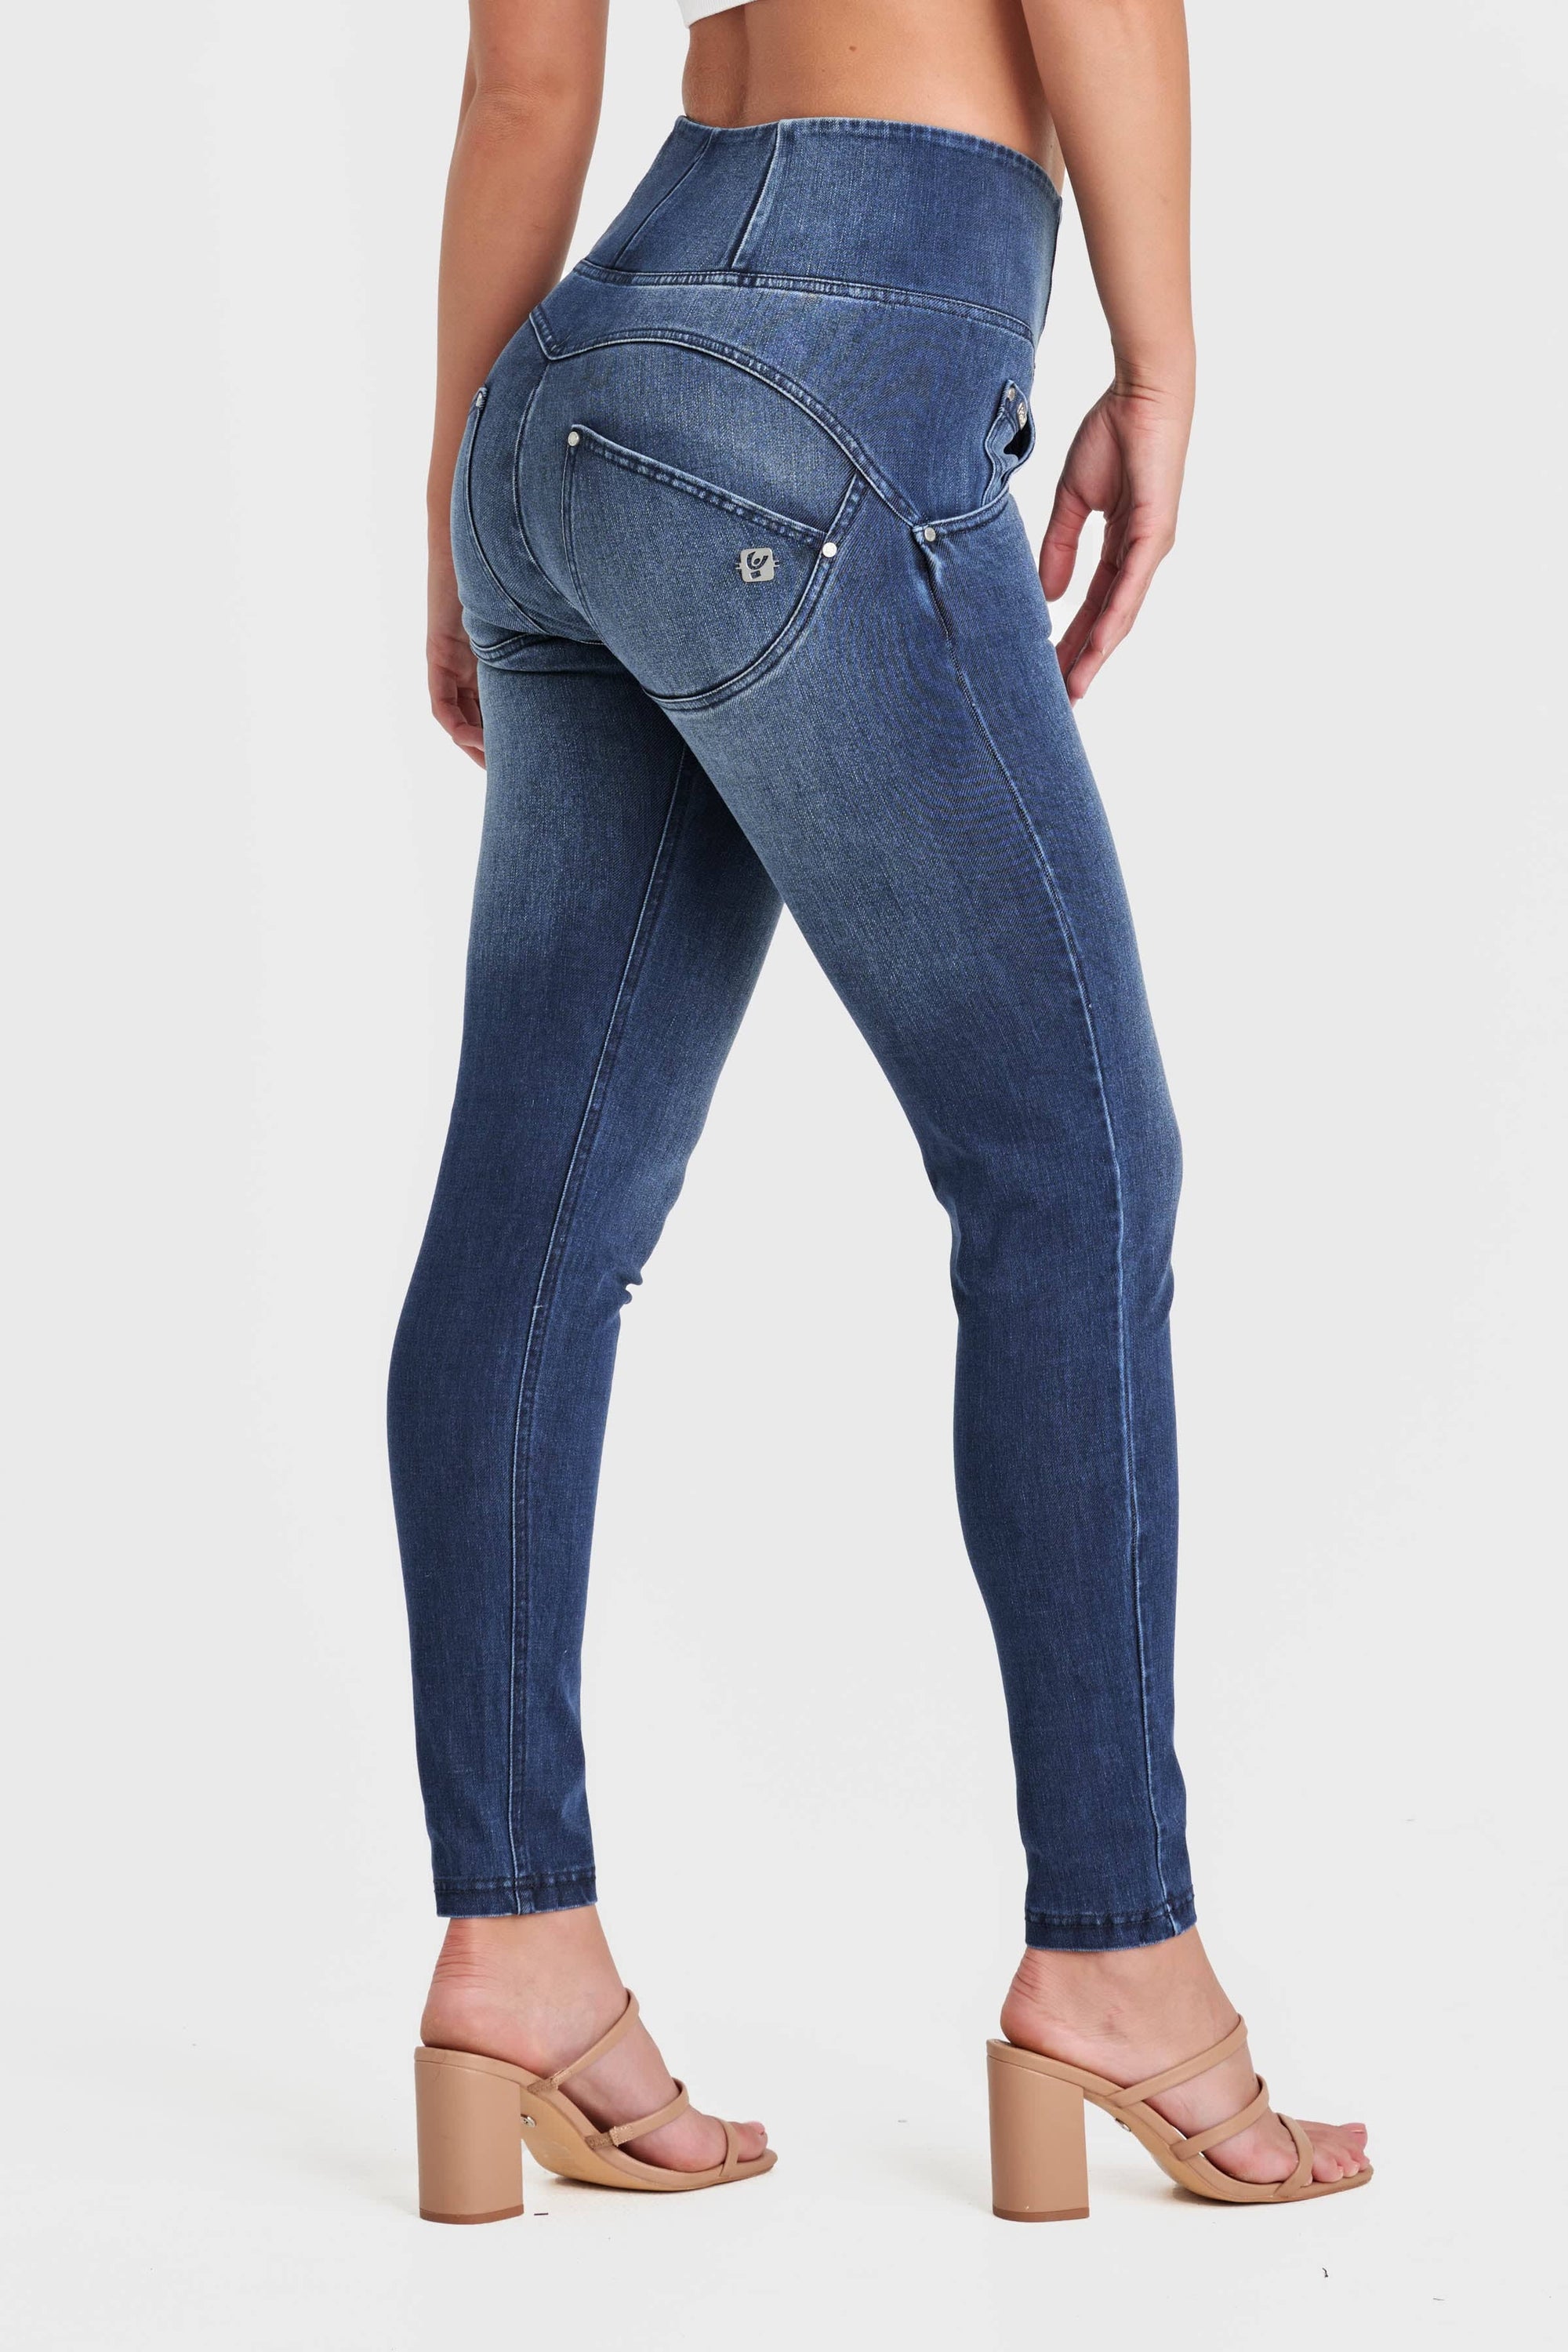 WR.UP® Snug Jeans - High Waisted - Full Length - Dark Blue + Blue Stitching 2